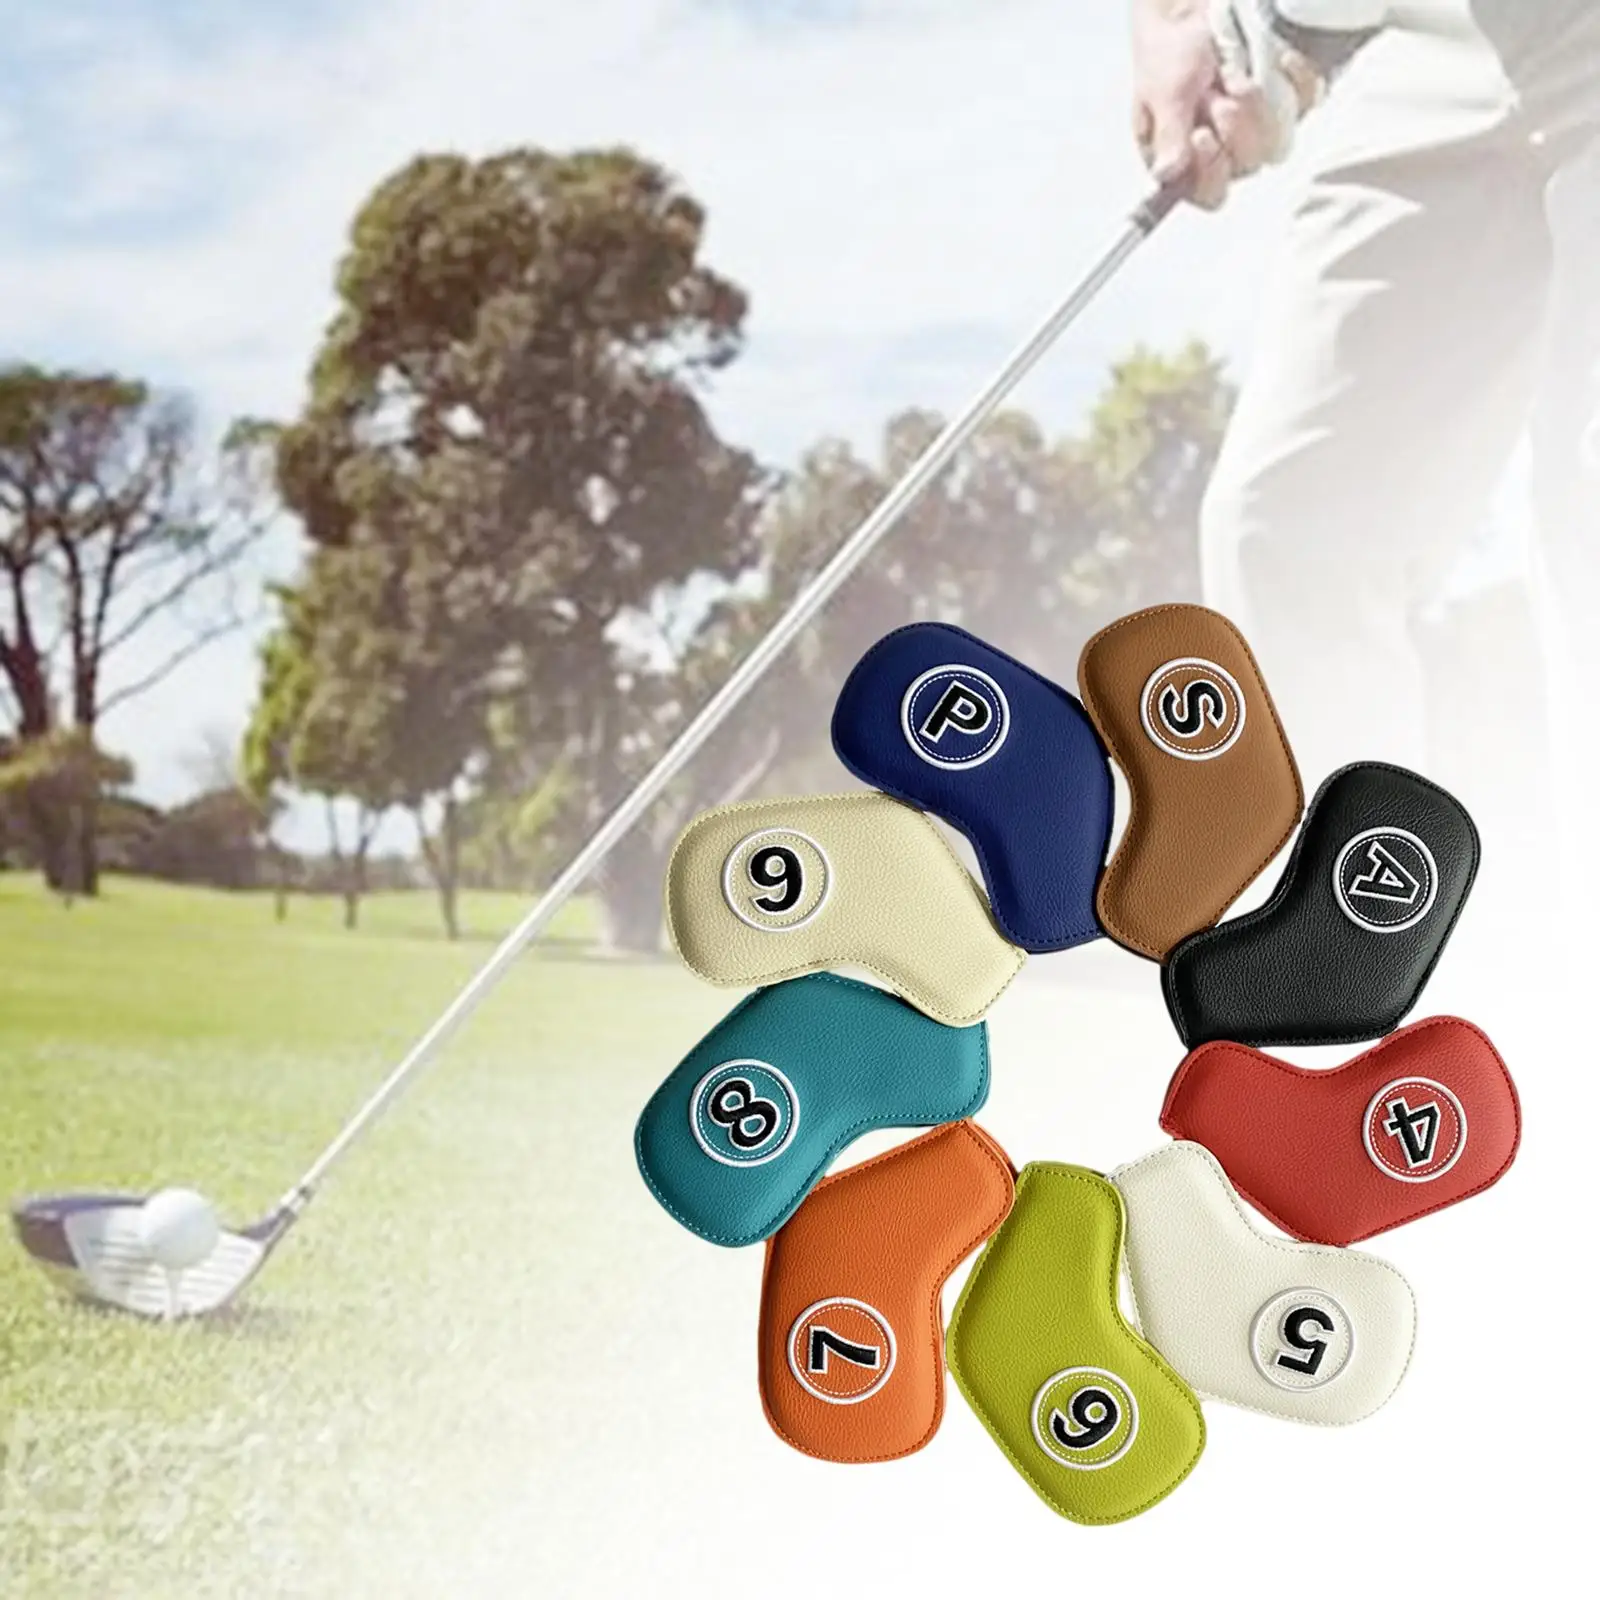 9x Golf Irons Head Covers Set Golf Club Head Cover Protector Waterproof Golfer Equipment